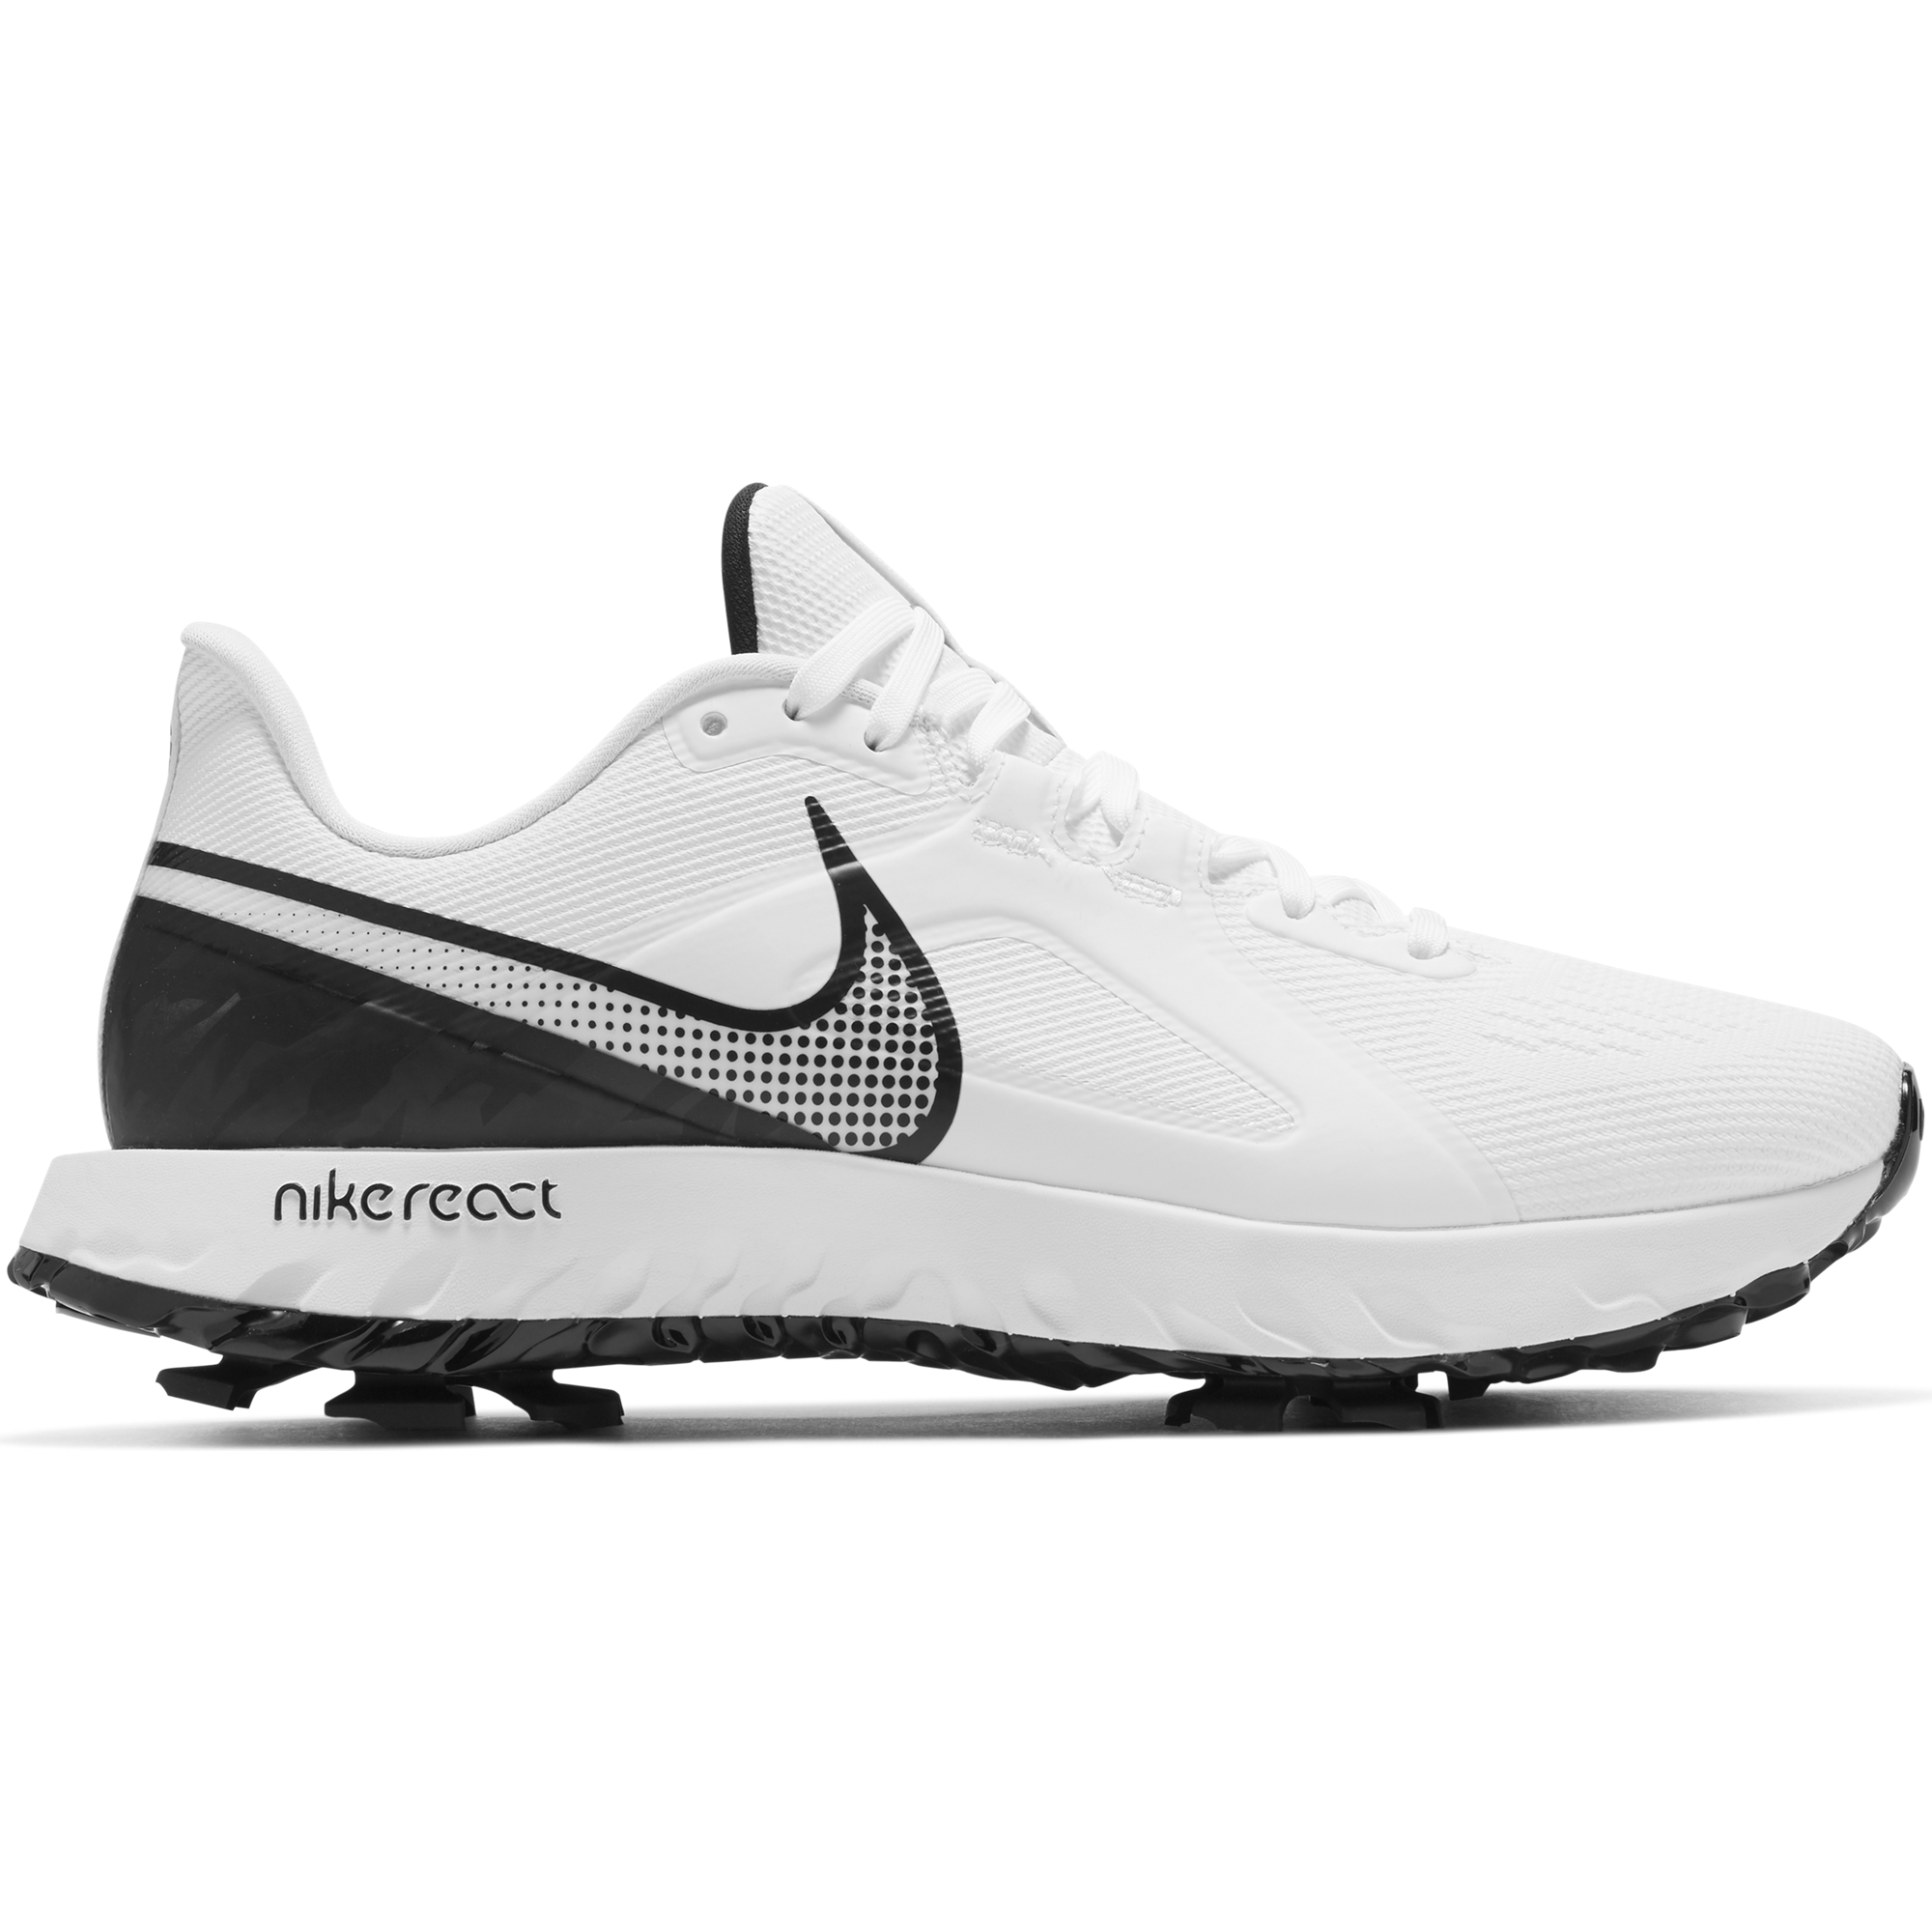 Nike React Infinity Pro Men's Golf Shoe - White/Black | PGA TOUR 